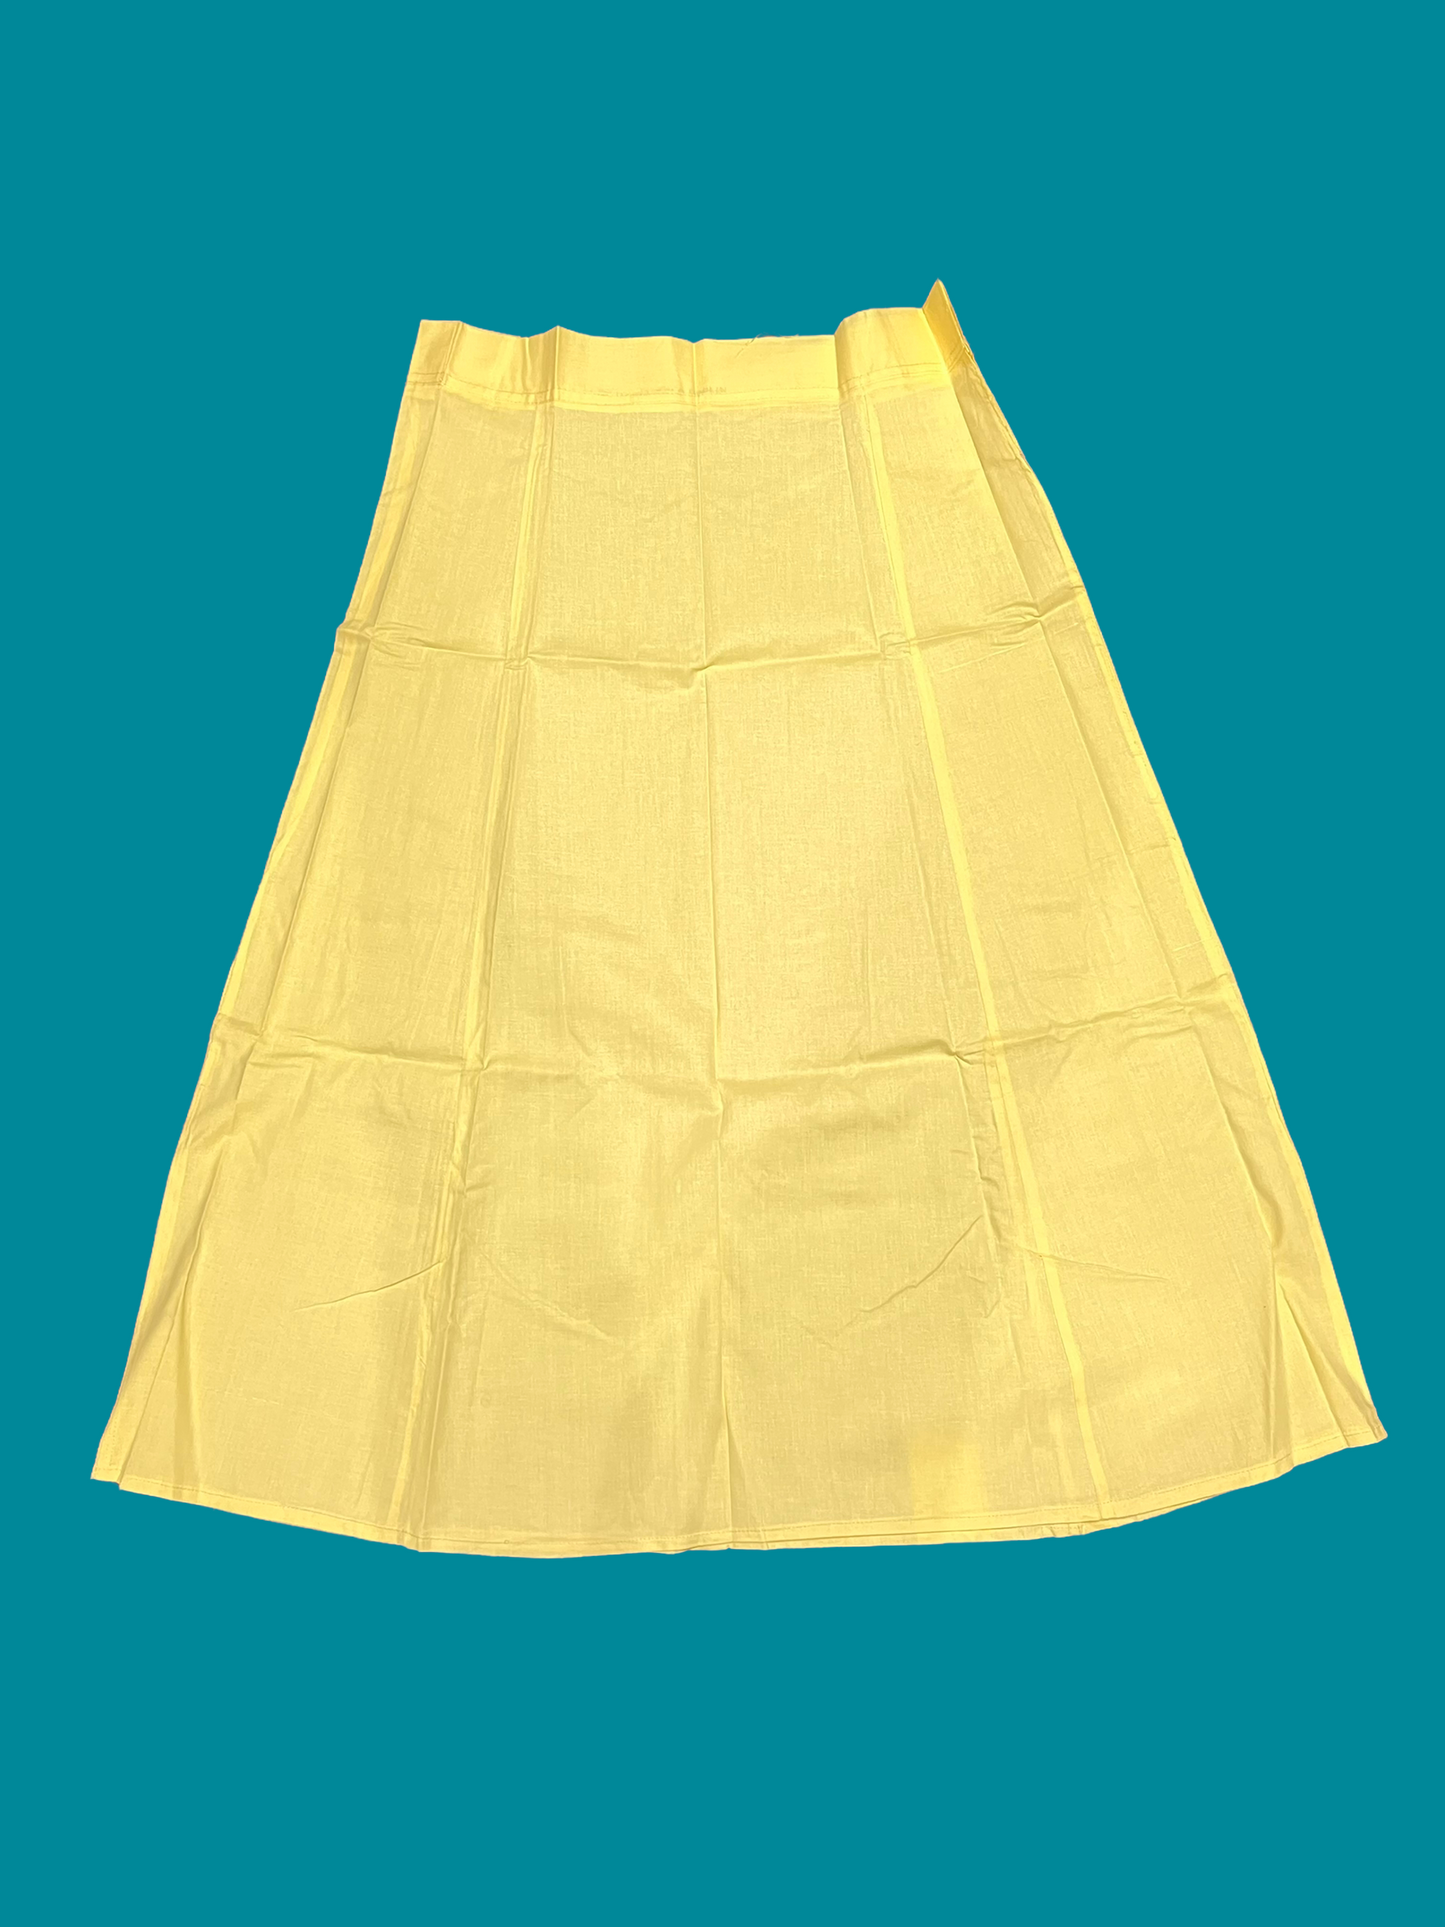 Essential Plain Cotton Petticoat for Women-13